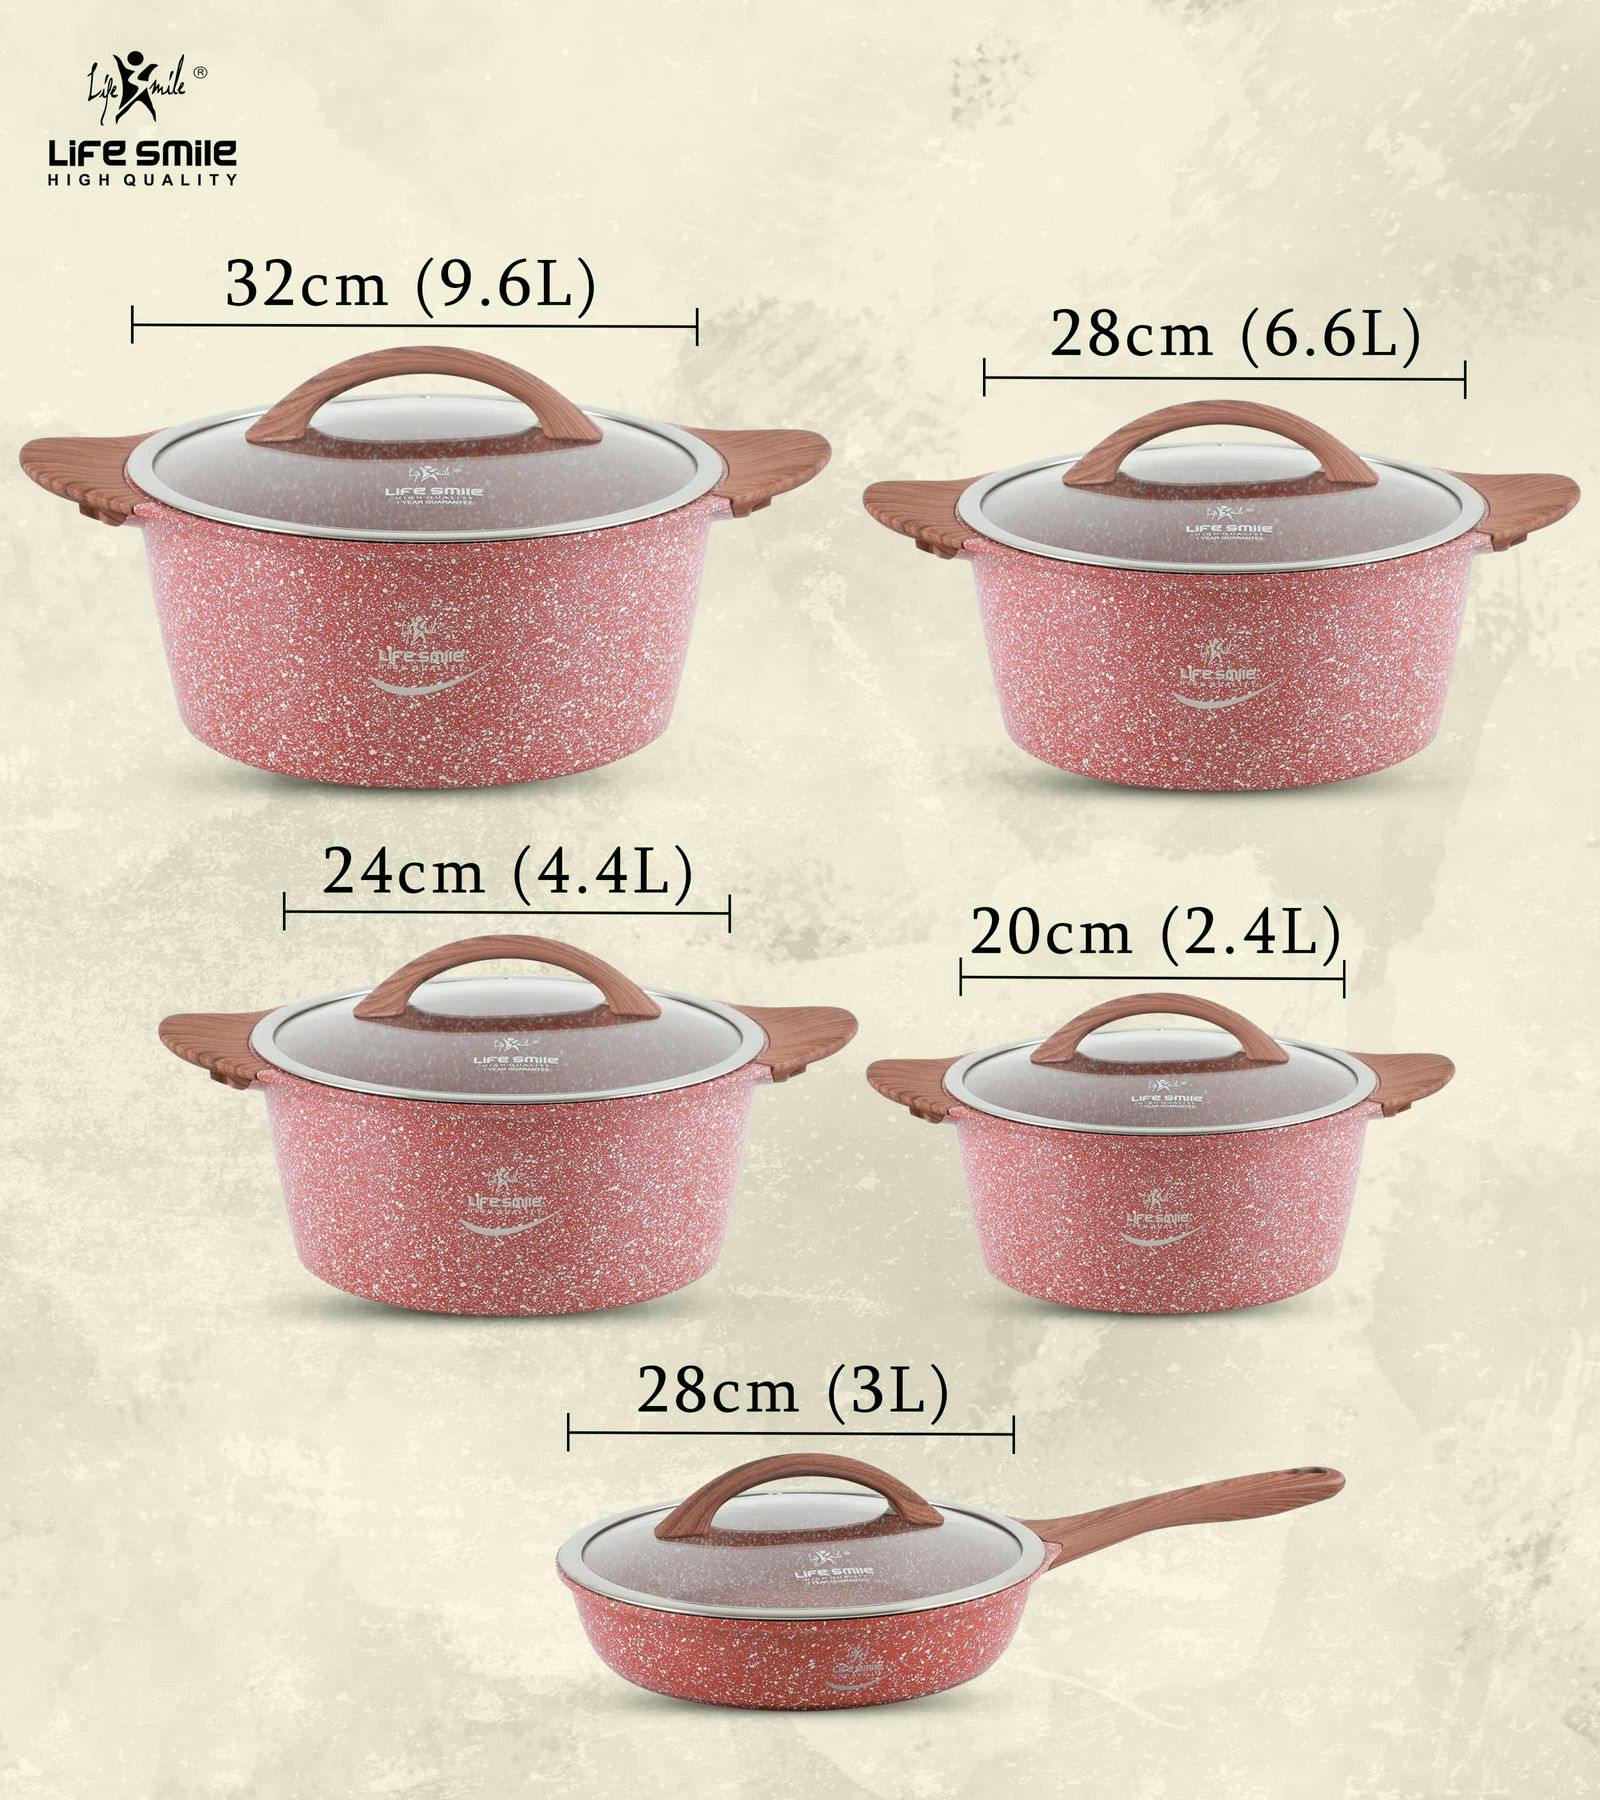 Aoibox 10-Piece Stone Nonstick Cookware Set in Beige